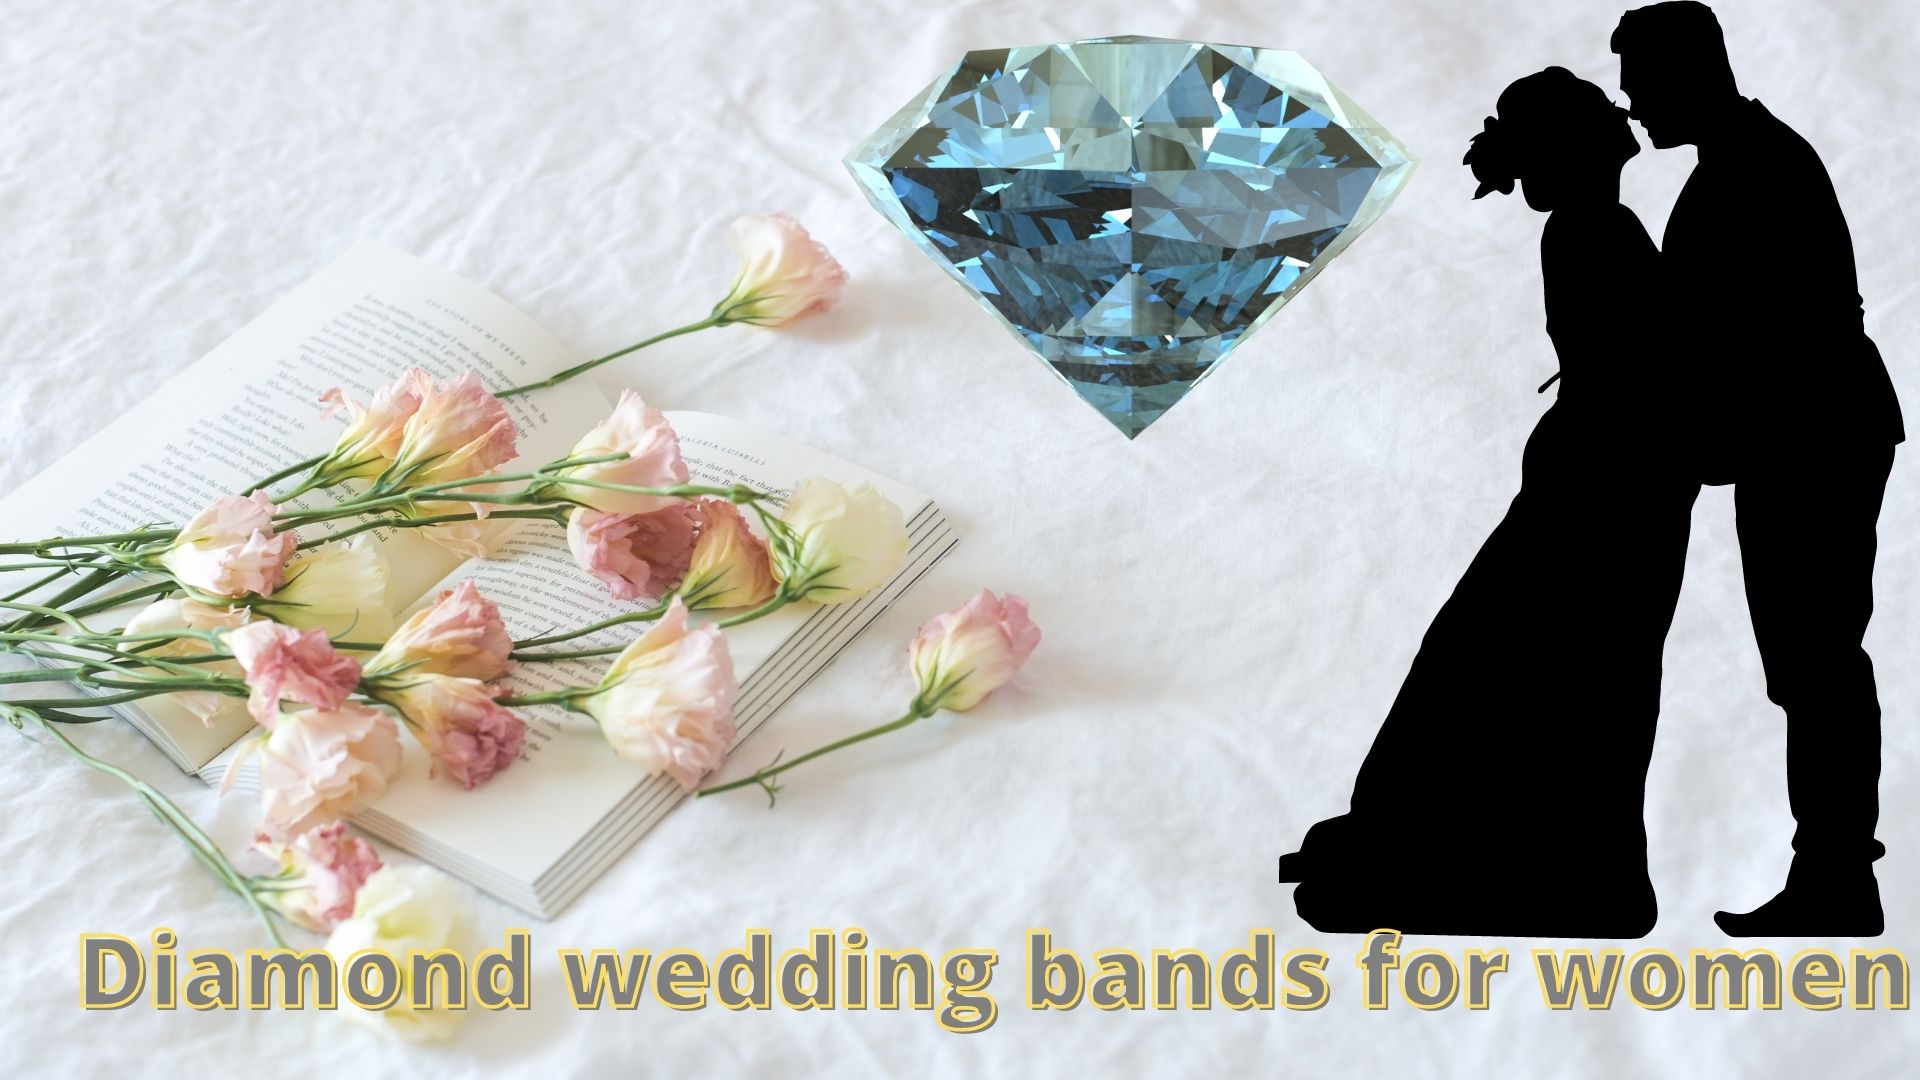 Why Choose Diamond wedding bands for women over regular rings?